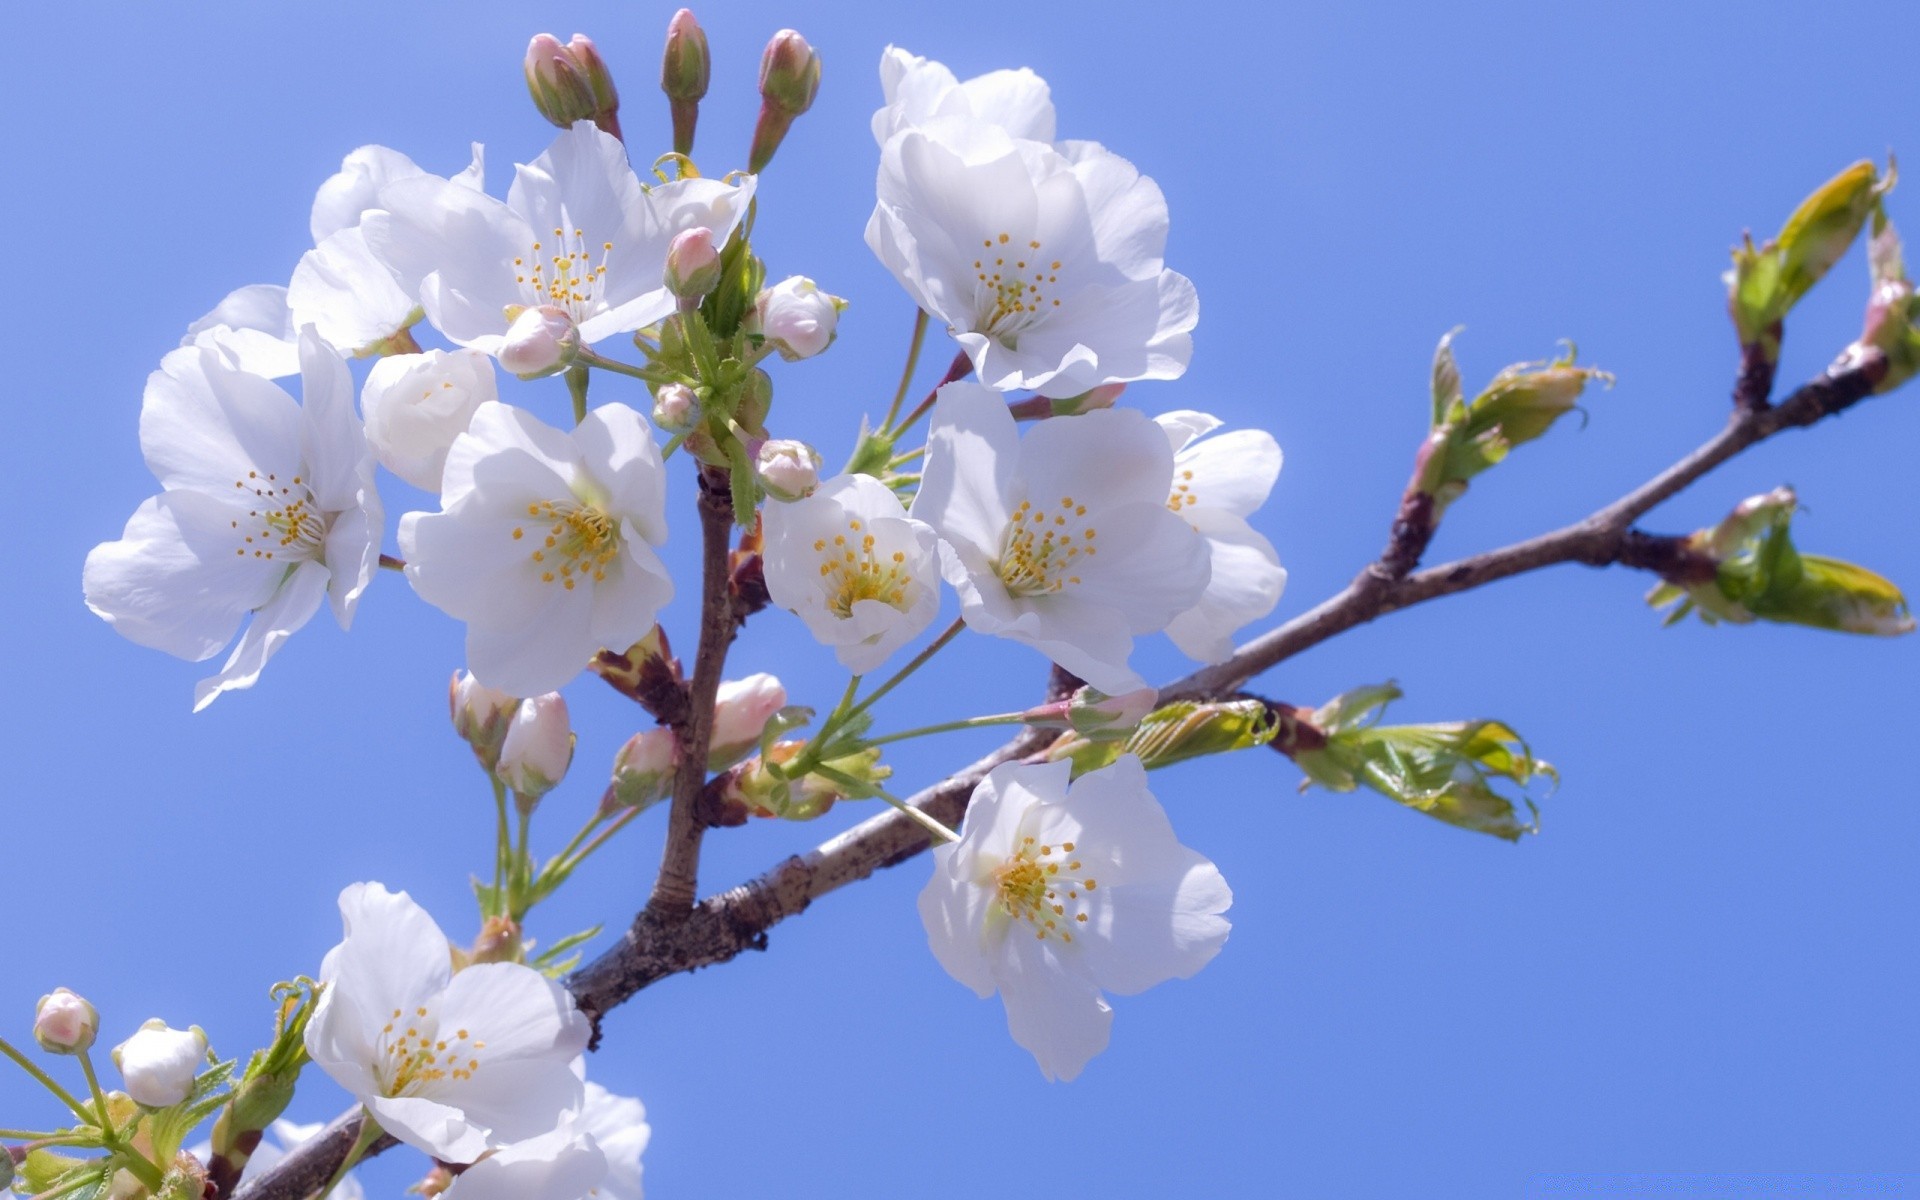 весна цветок вишня филиал природа дерево флора дружище рост блюминг лепесток на открытом воздухе лист сливы сезон сад яблоко лето абрикос